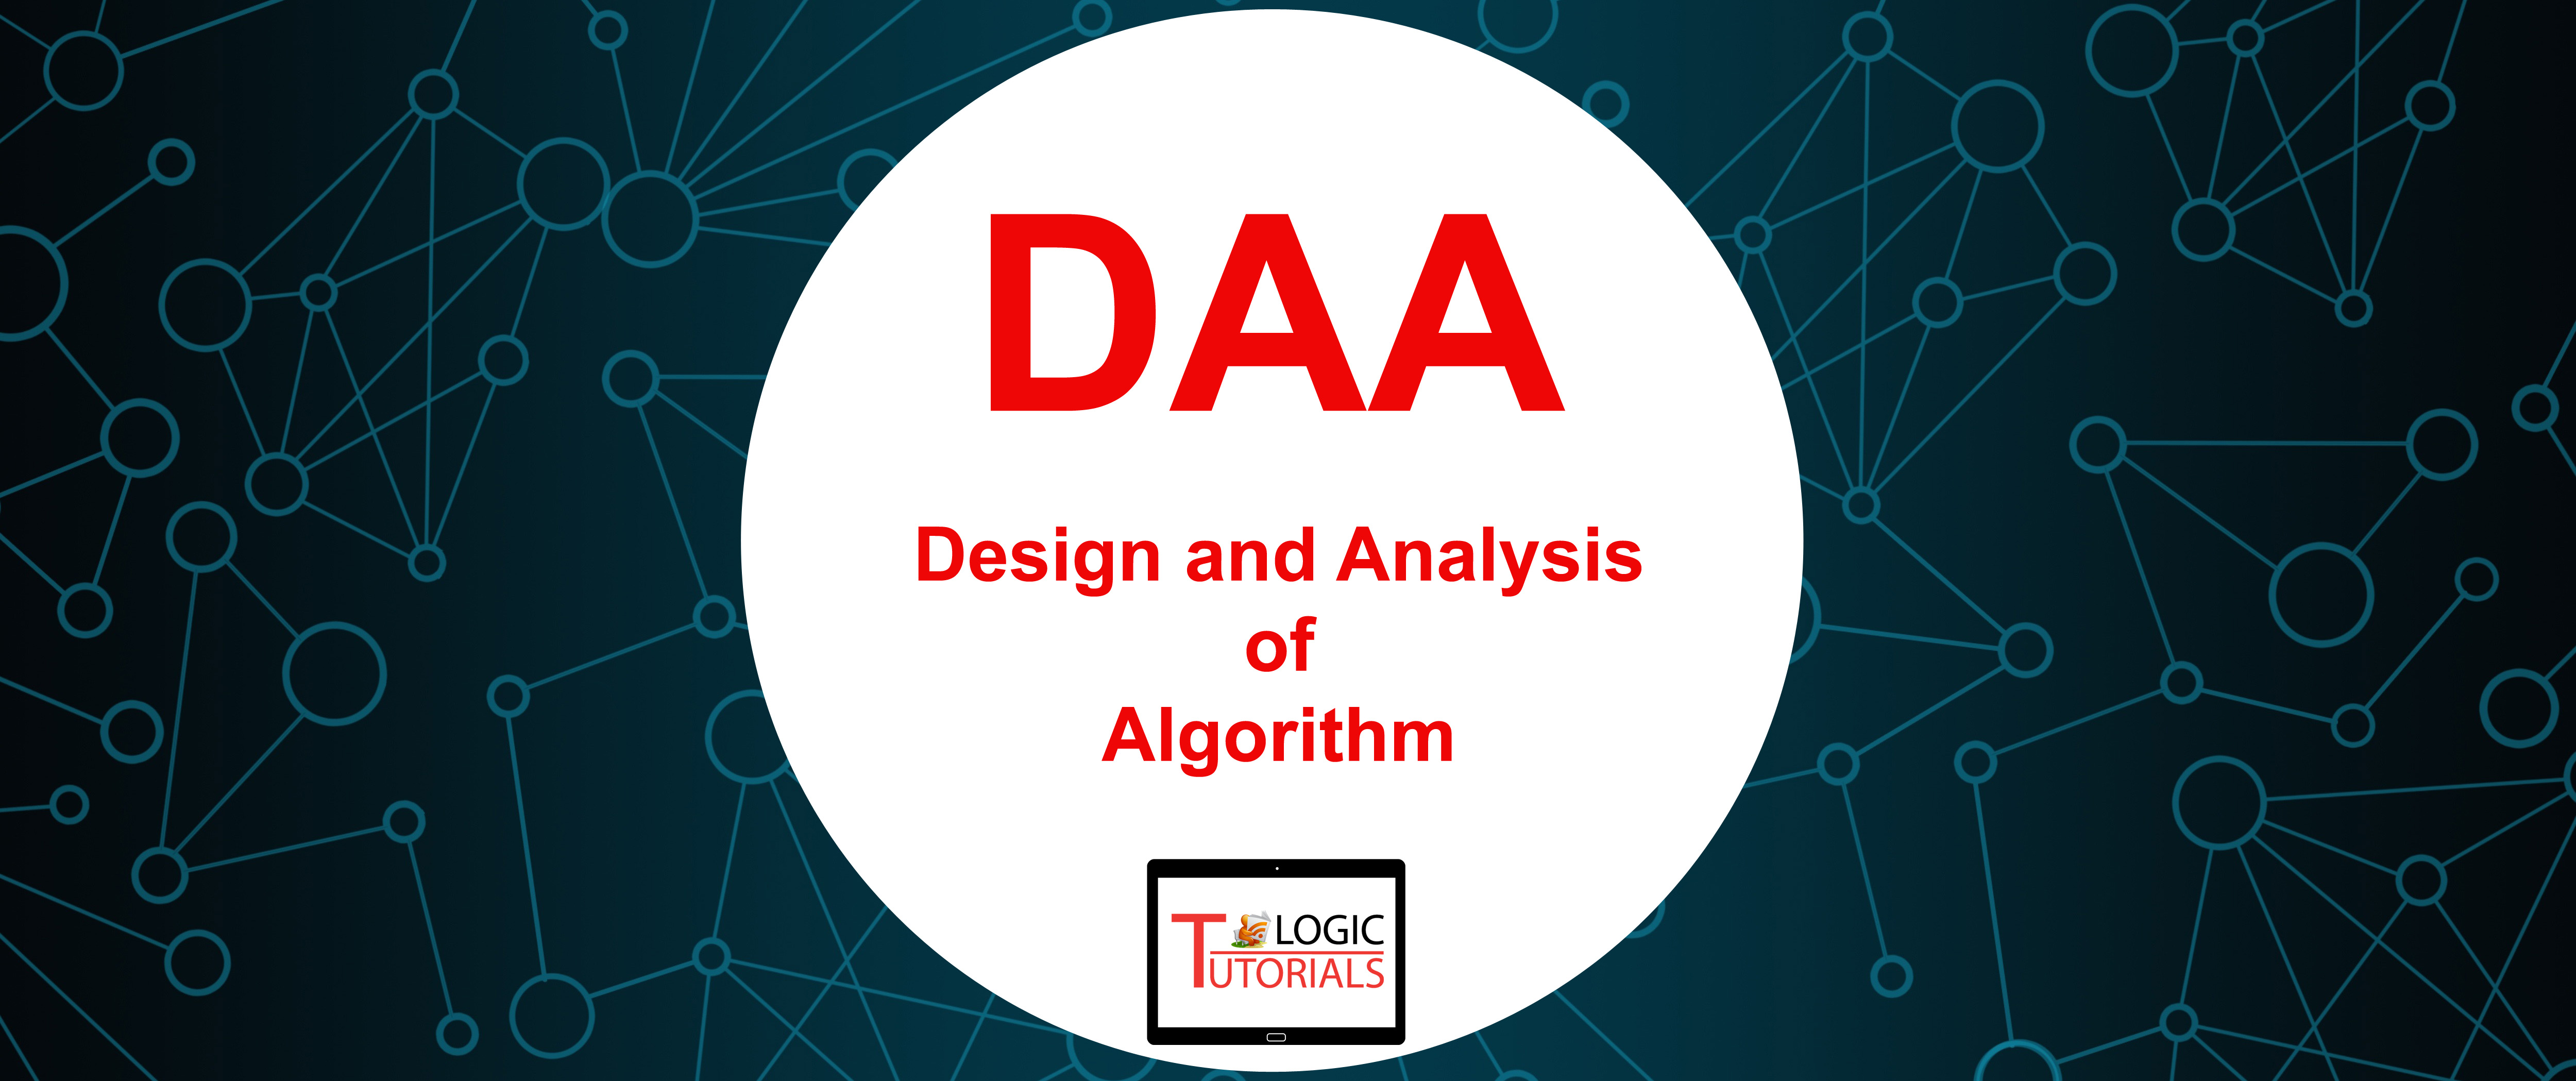 Design and Analysis of Algorithms(AUTONOMOUS)